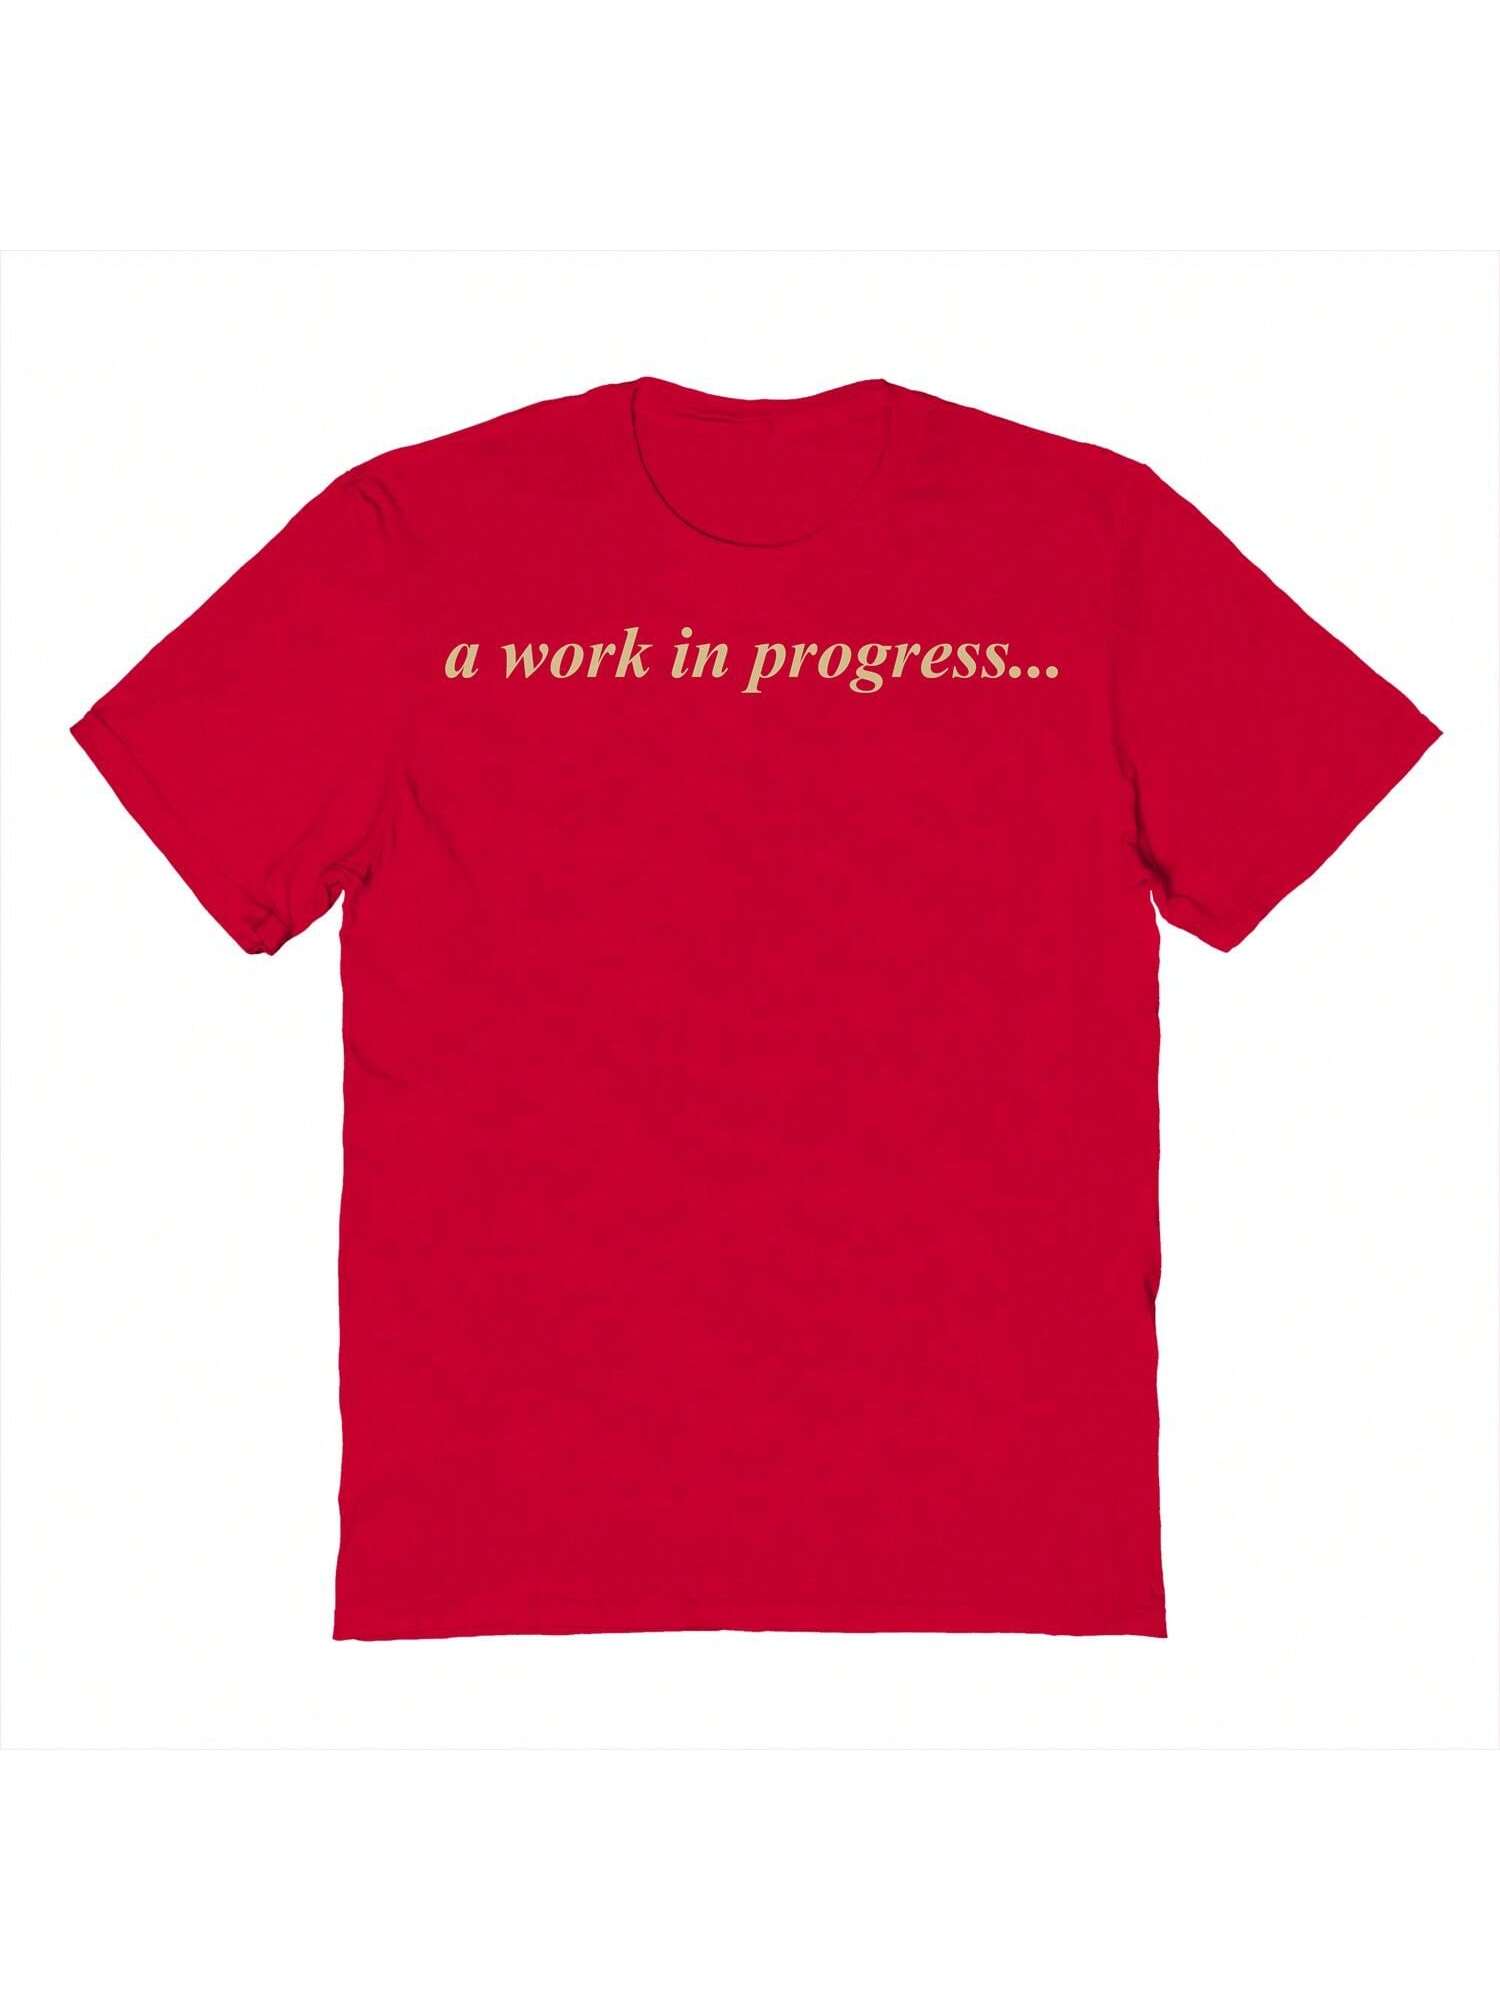 Хлопковая футболка унисекс с короткими рукавами Nearly There WIP с графикой, красный